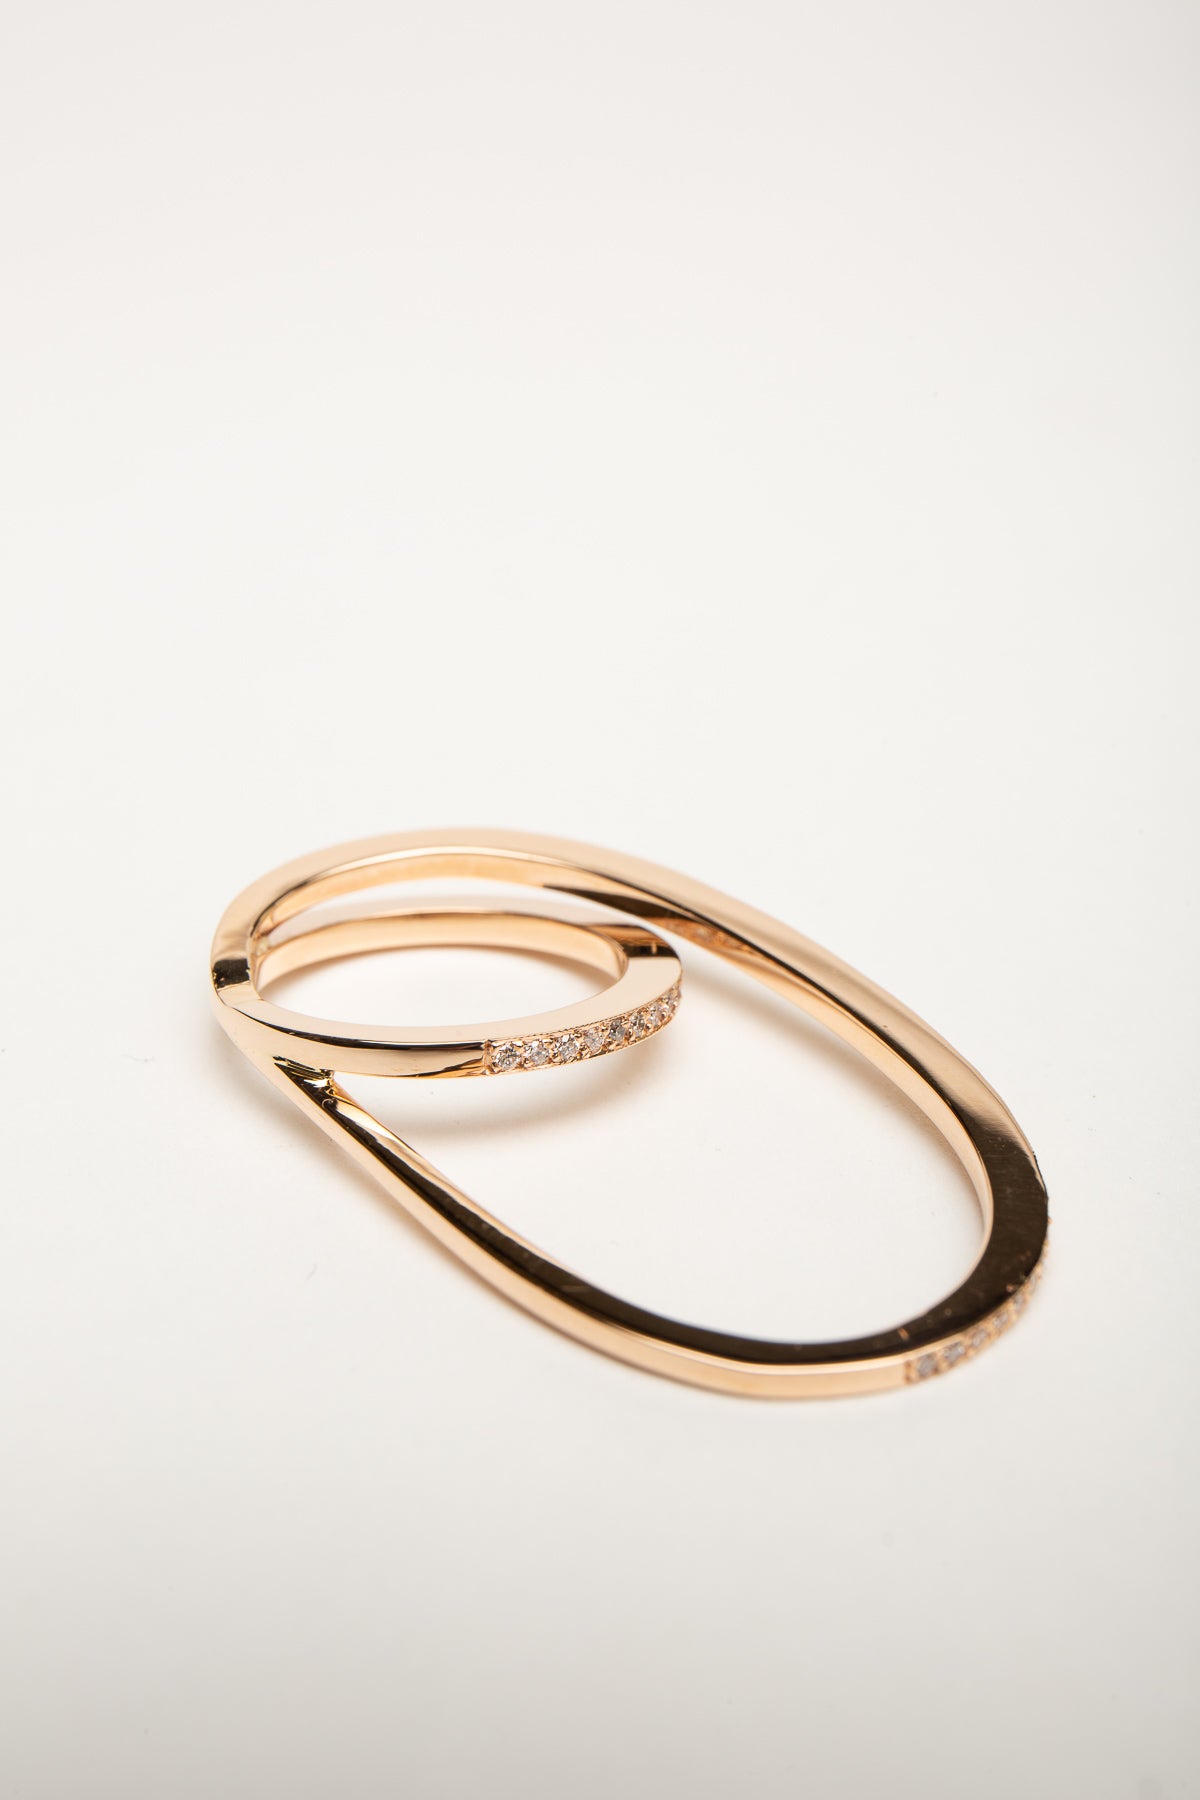 FIYA JEWELLERY | ROSE GOLD DIAMOND DOUBLE RING